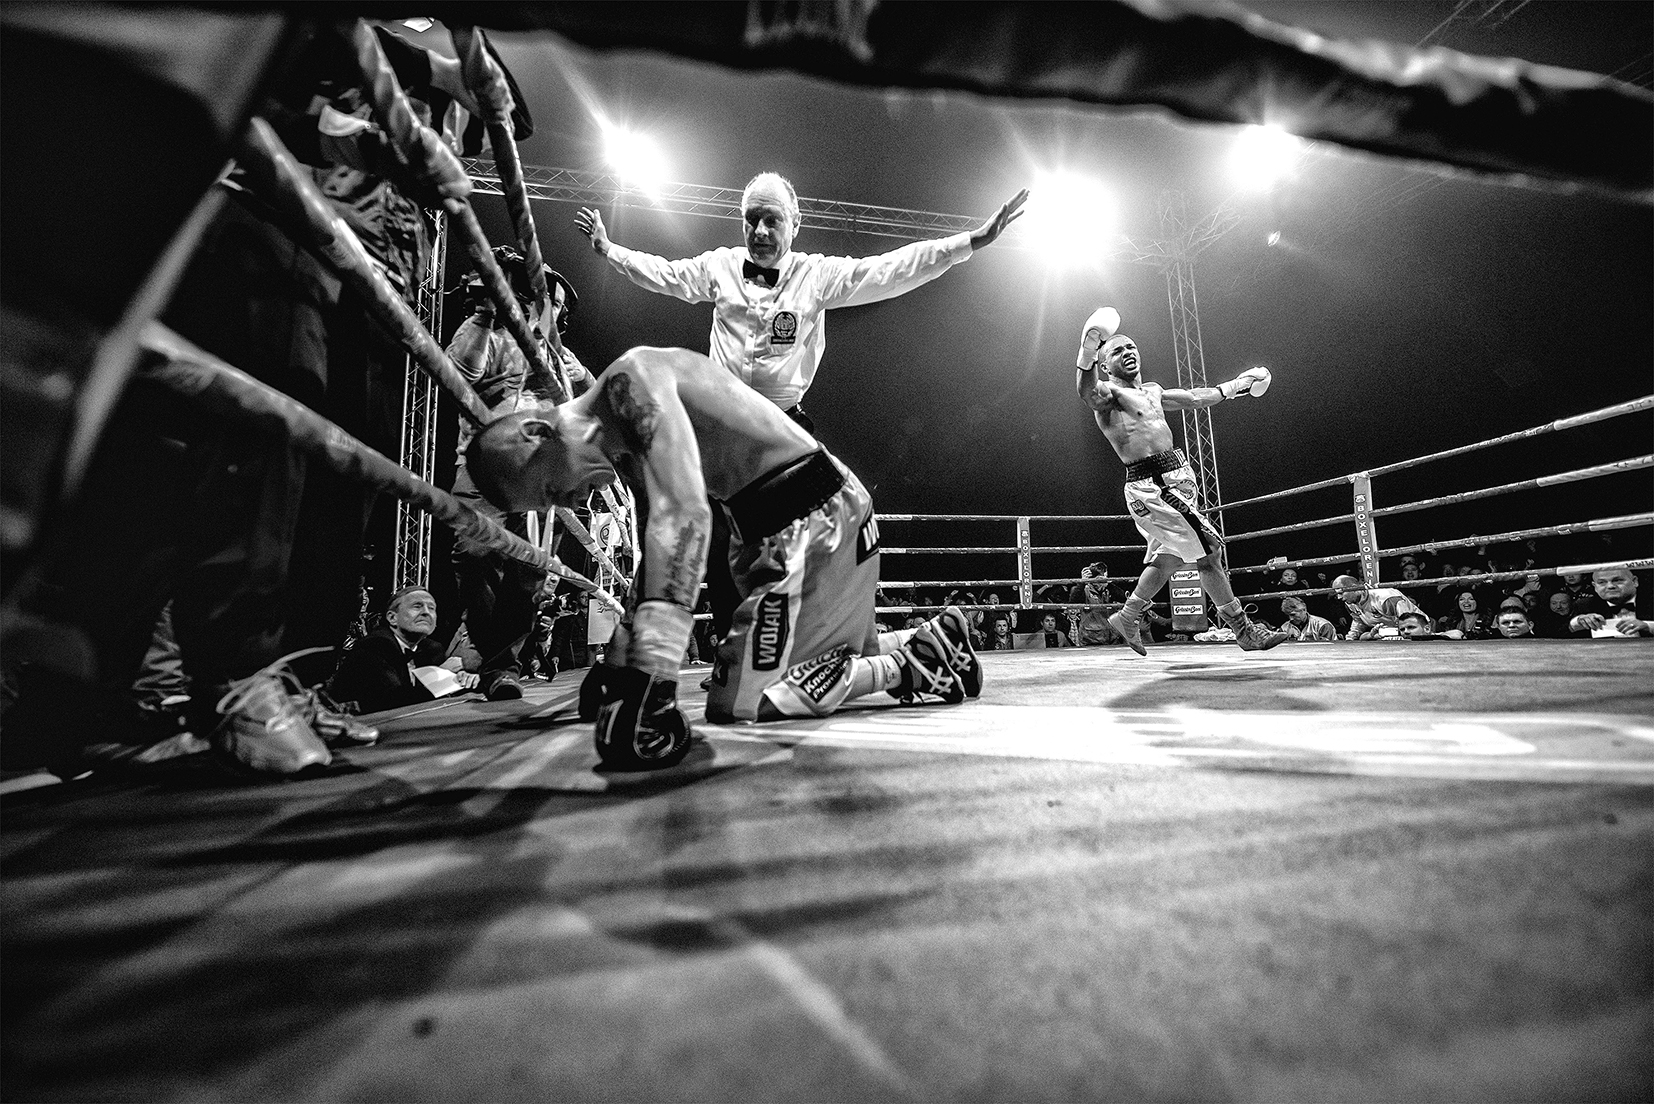 Leonard Bundu batte Rafal Jackiewicz per KO all’undicesima ripresa e mantiene il titolo EBU dei pesi welter (photo: David Andre Weiss, Florence University of the Arts)